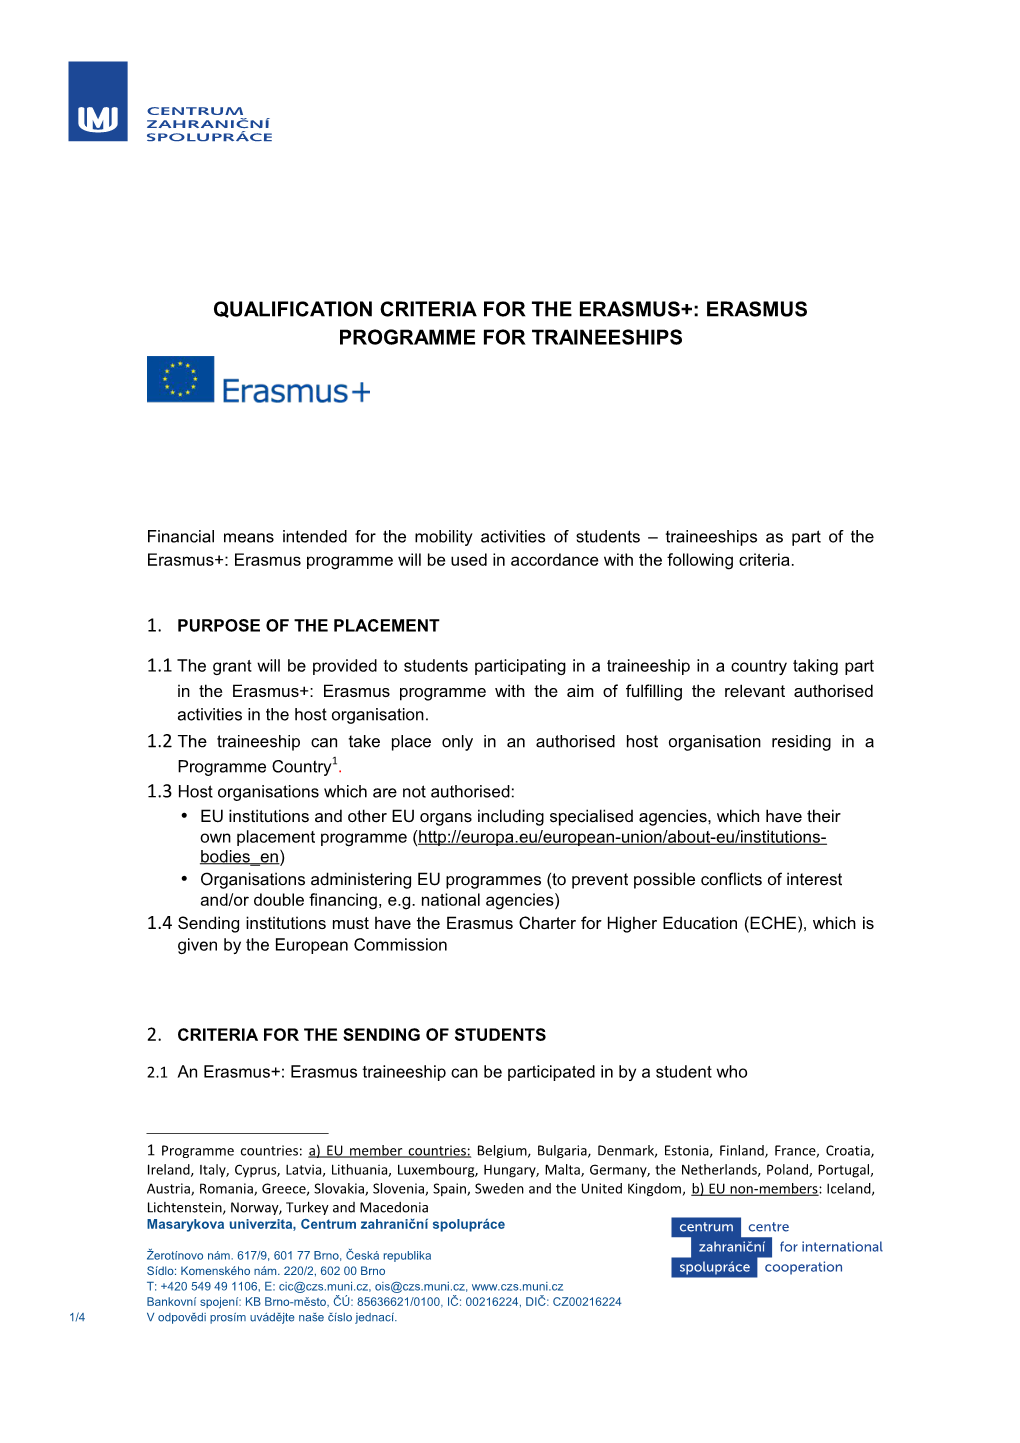 QUALIFICATION CRITERIA for the Erasmus+: Erasmus PROGRAMME for TRAINEESHIPS